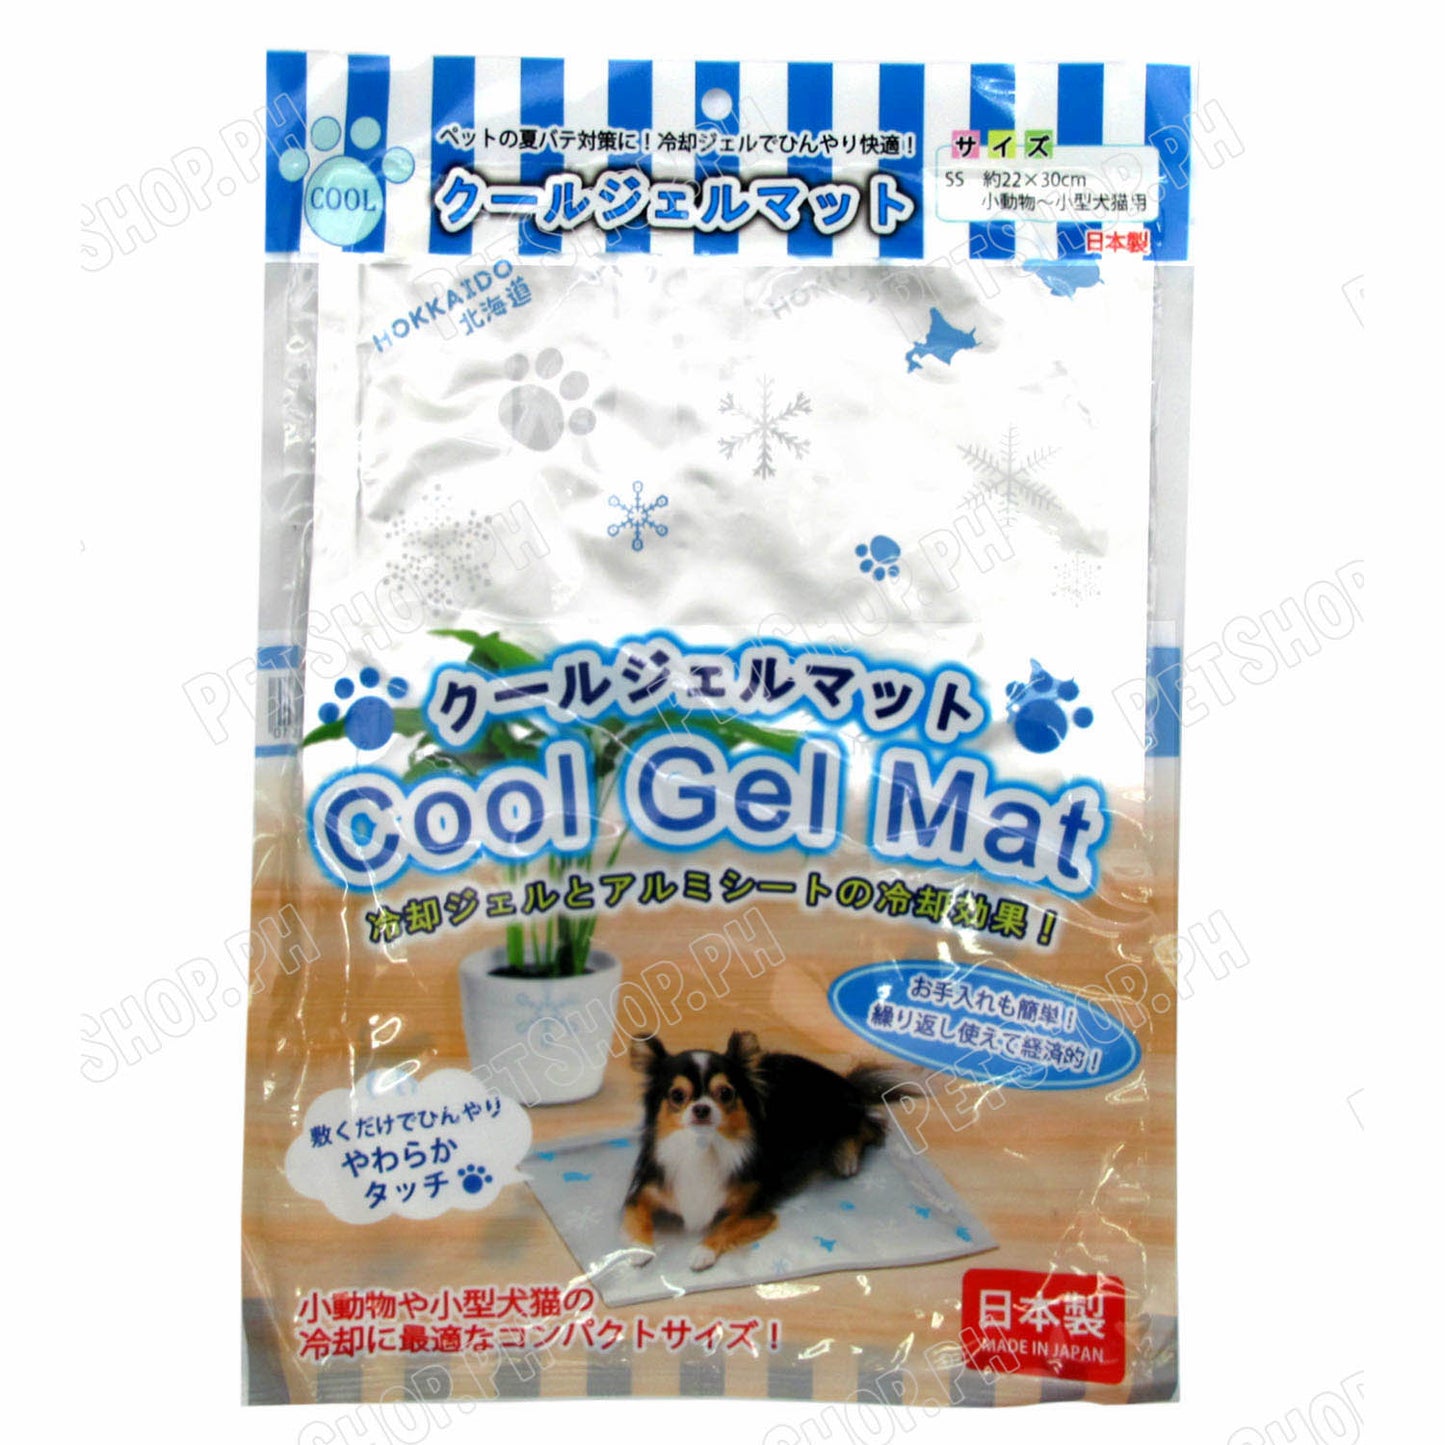 Hokkaido Cool Gel Mat